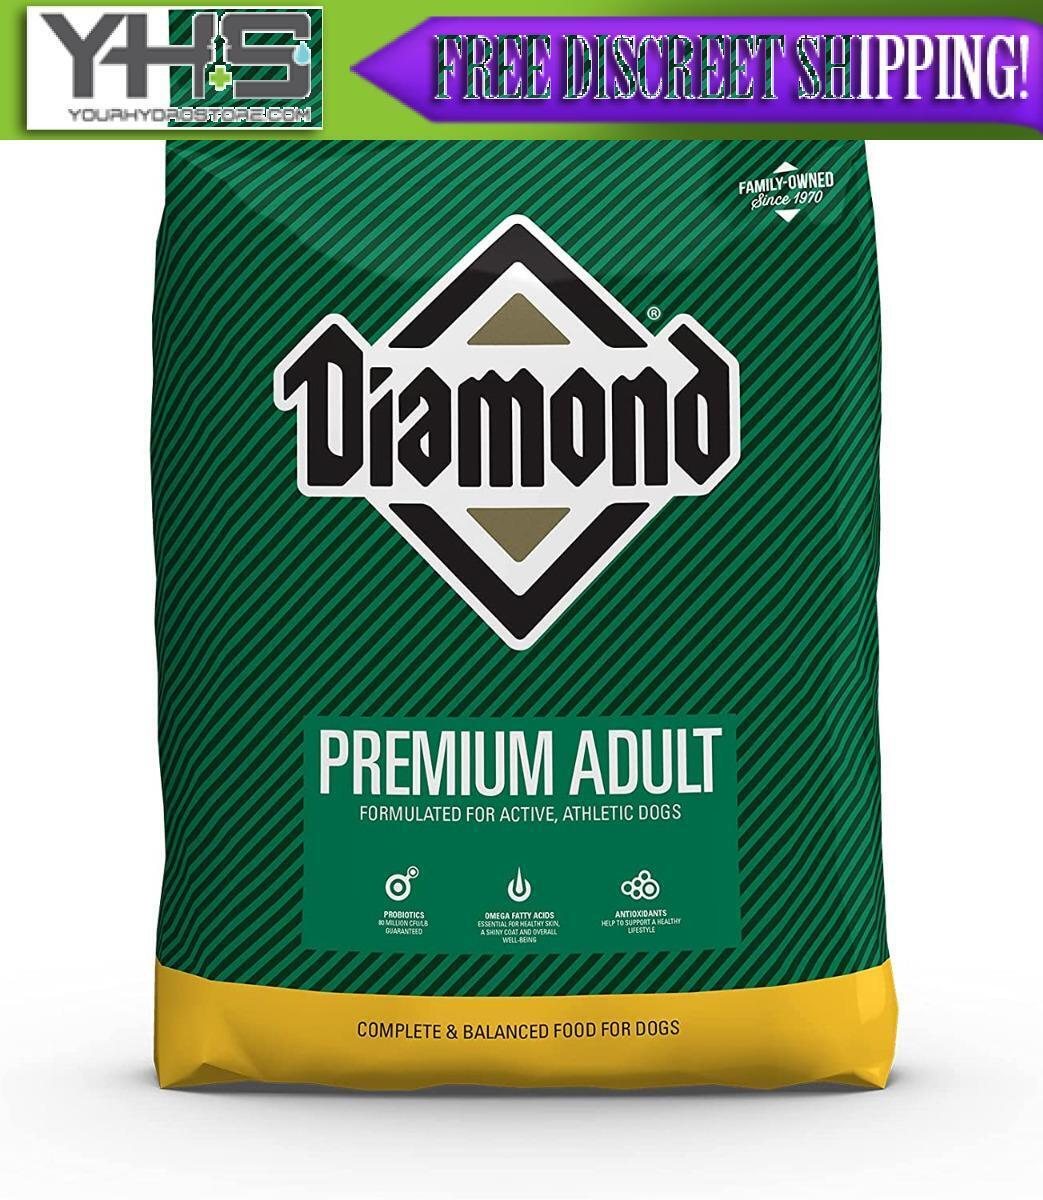 Diamond Premium Adult Dry Dog Food Formula 40lb - Green Bag